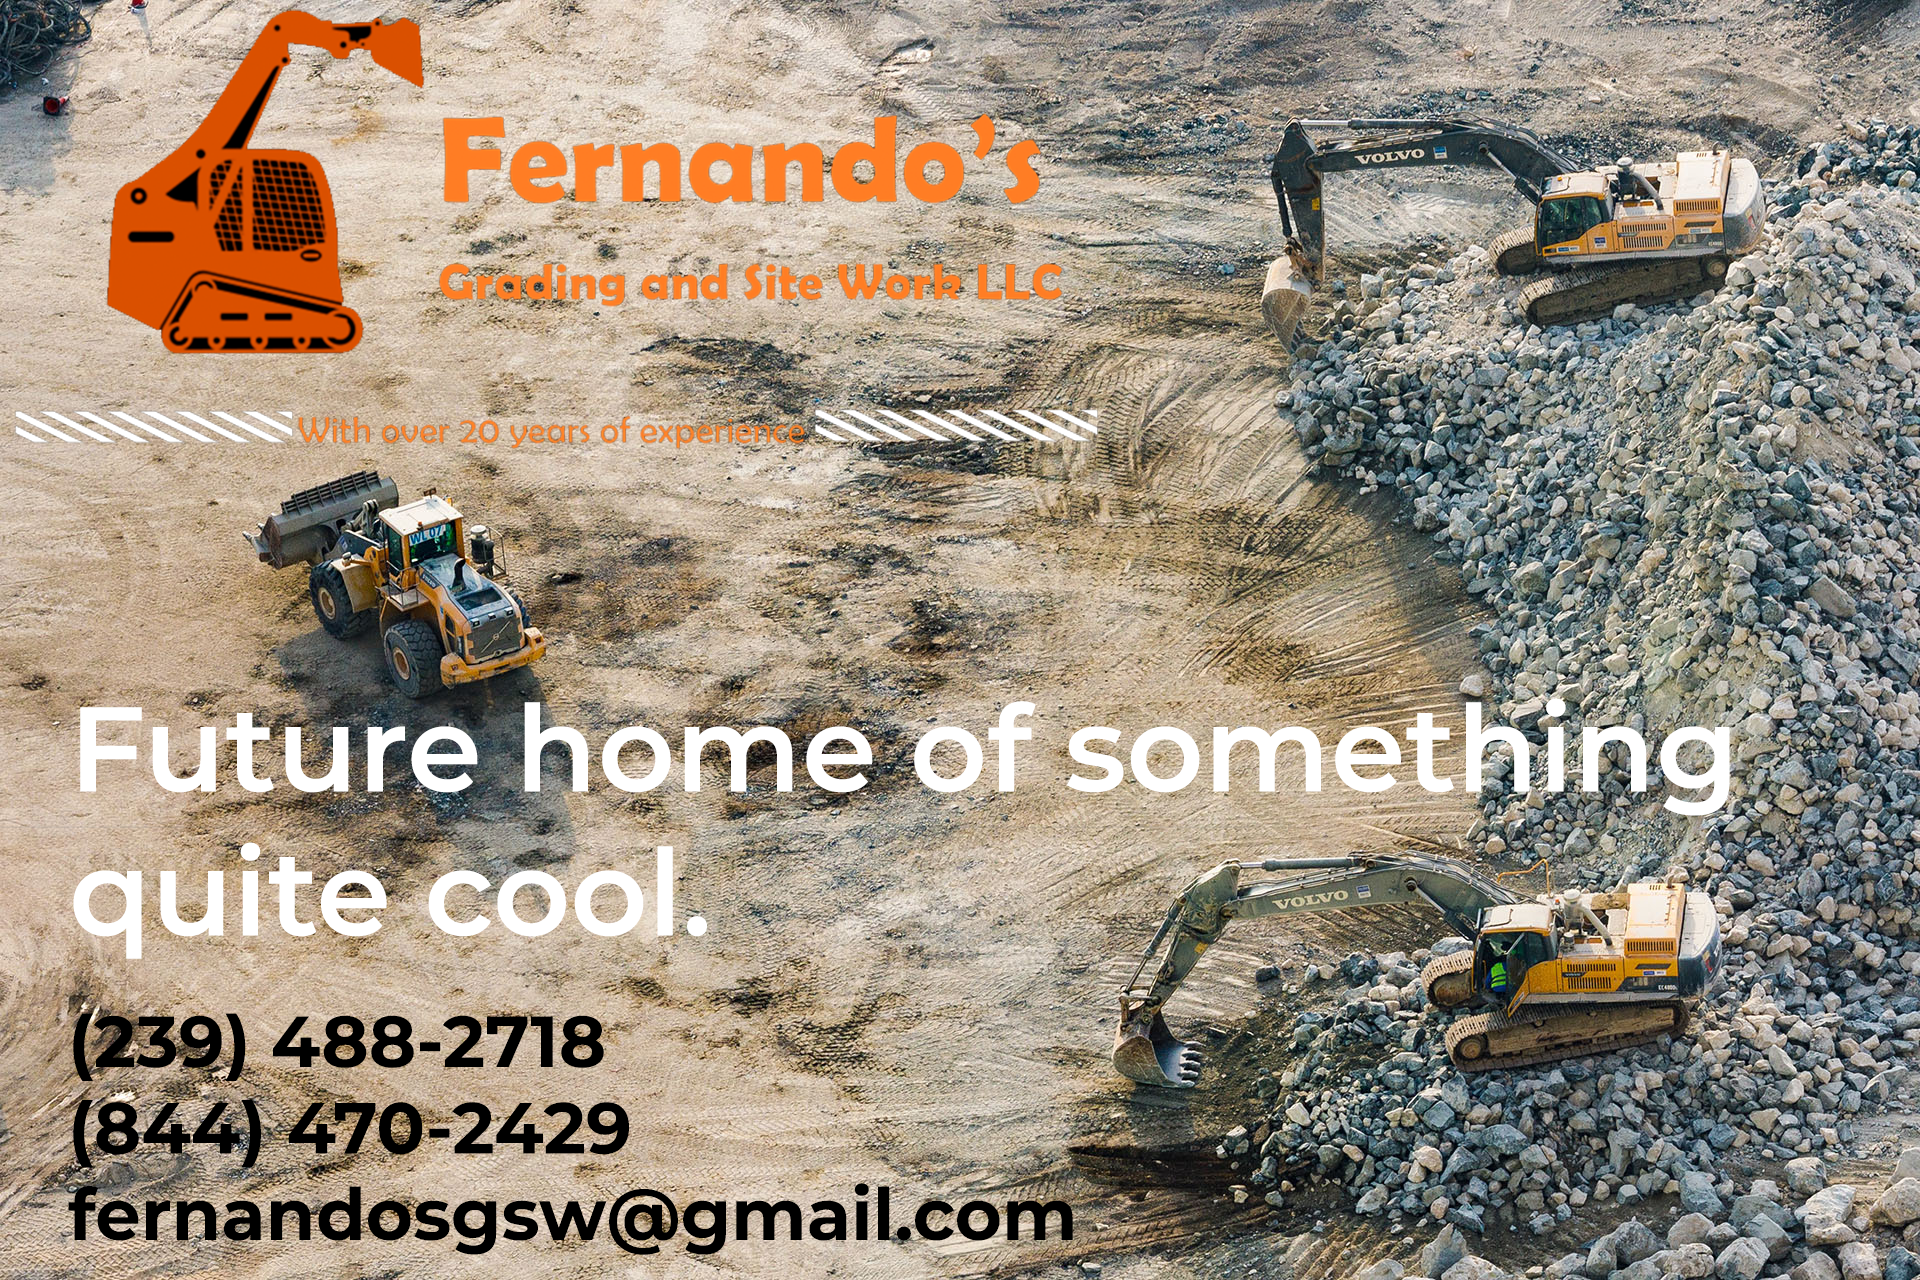 Fernando's Grading and Site Work LLC